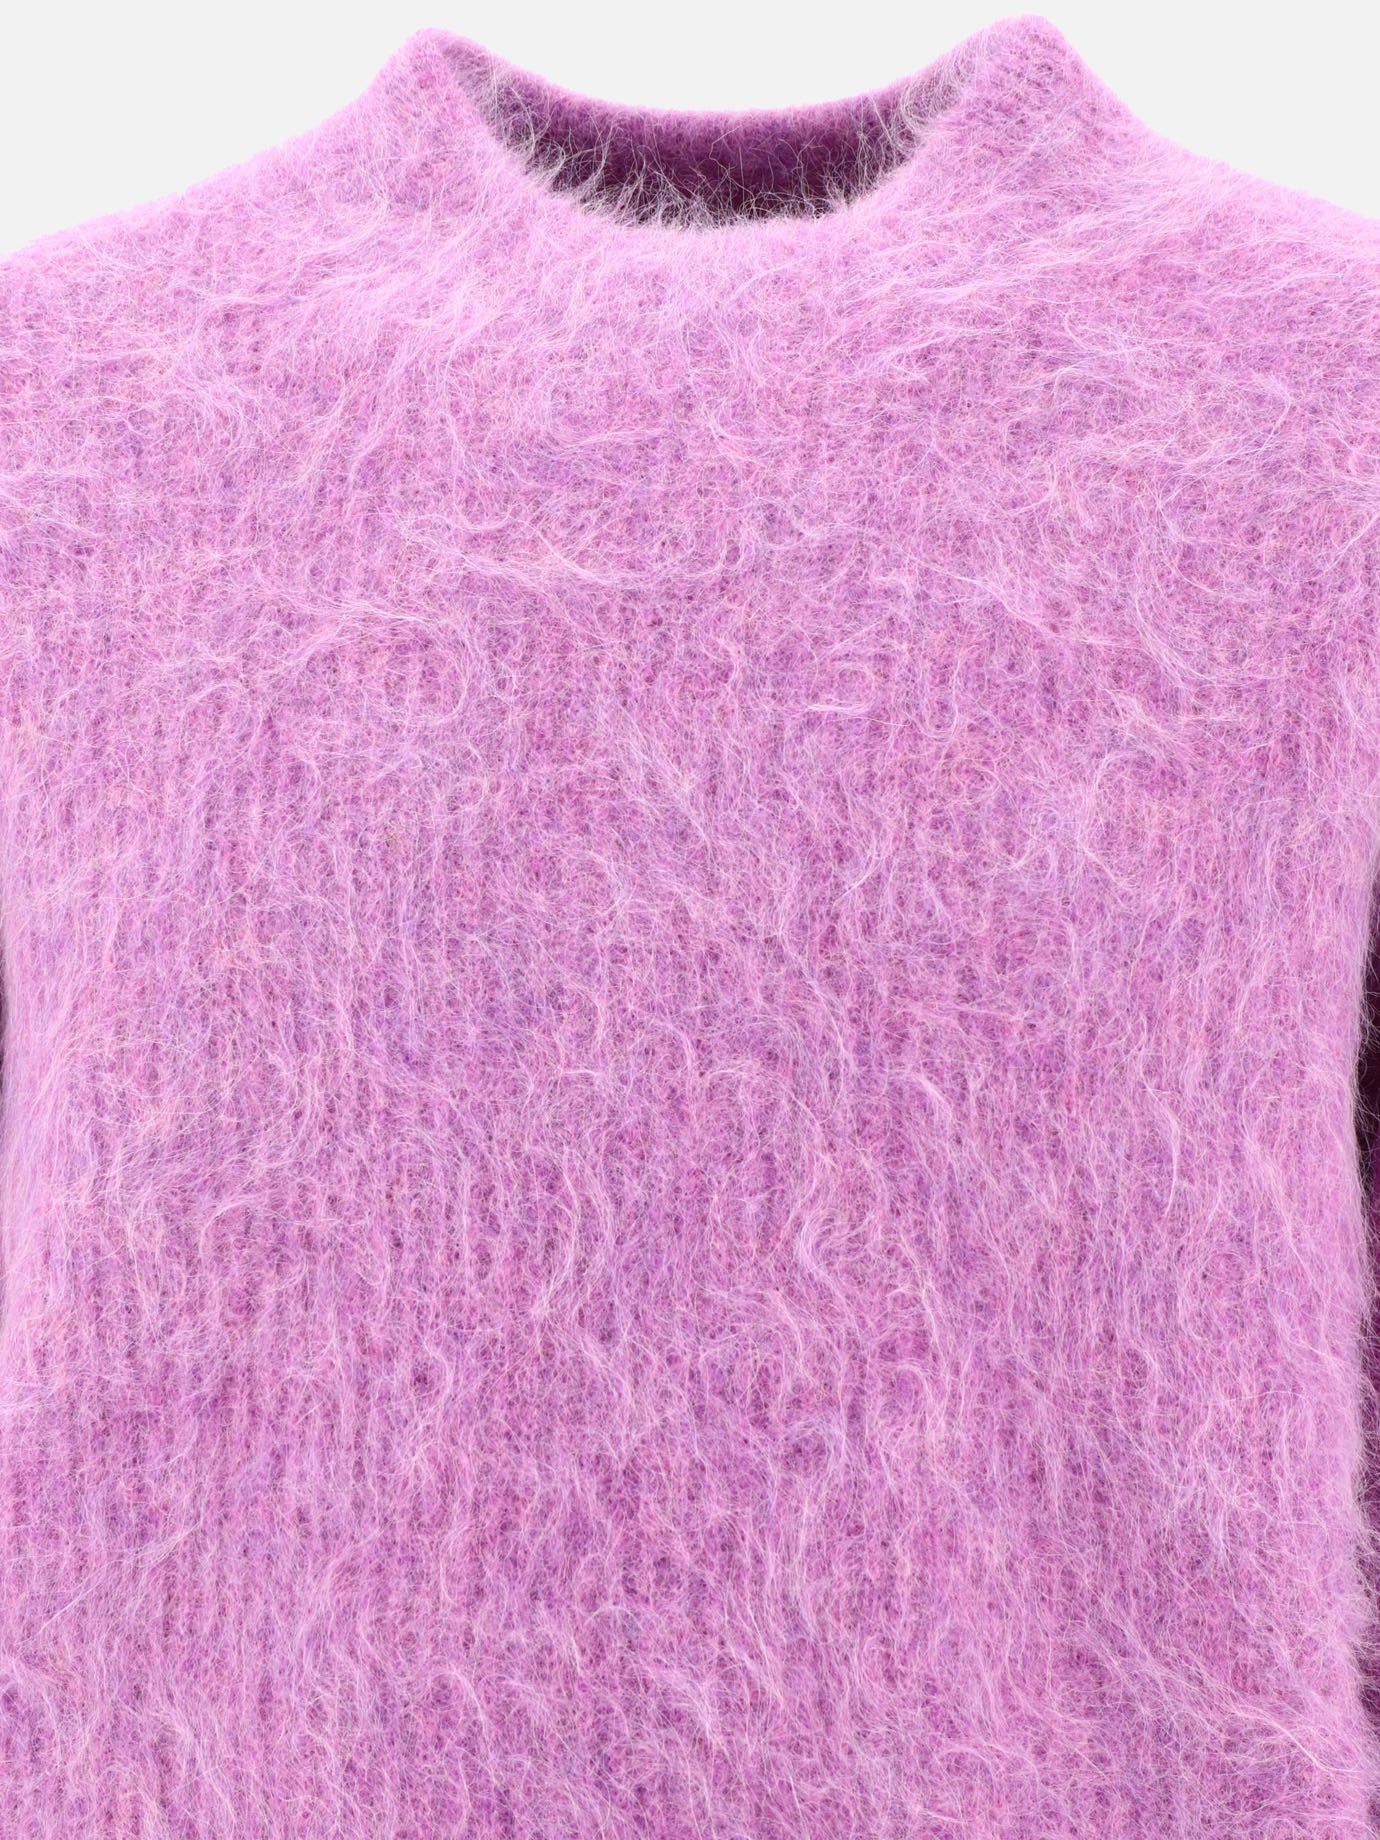 "Haru" sweater